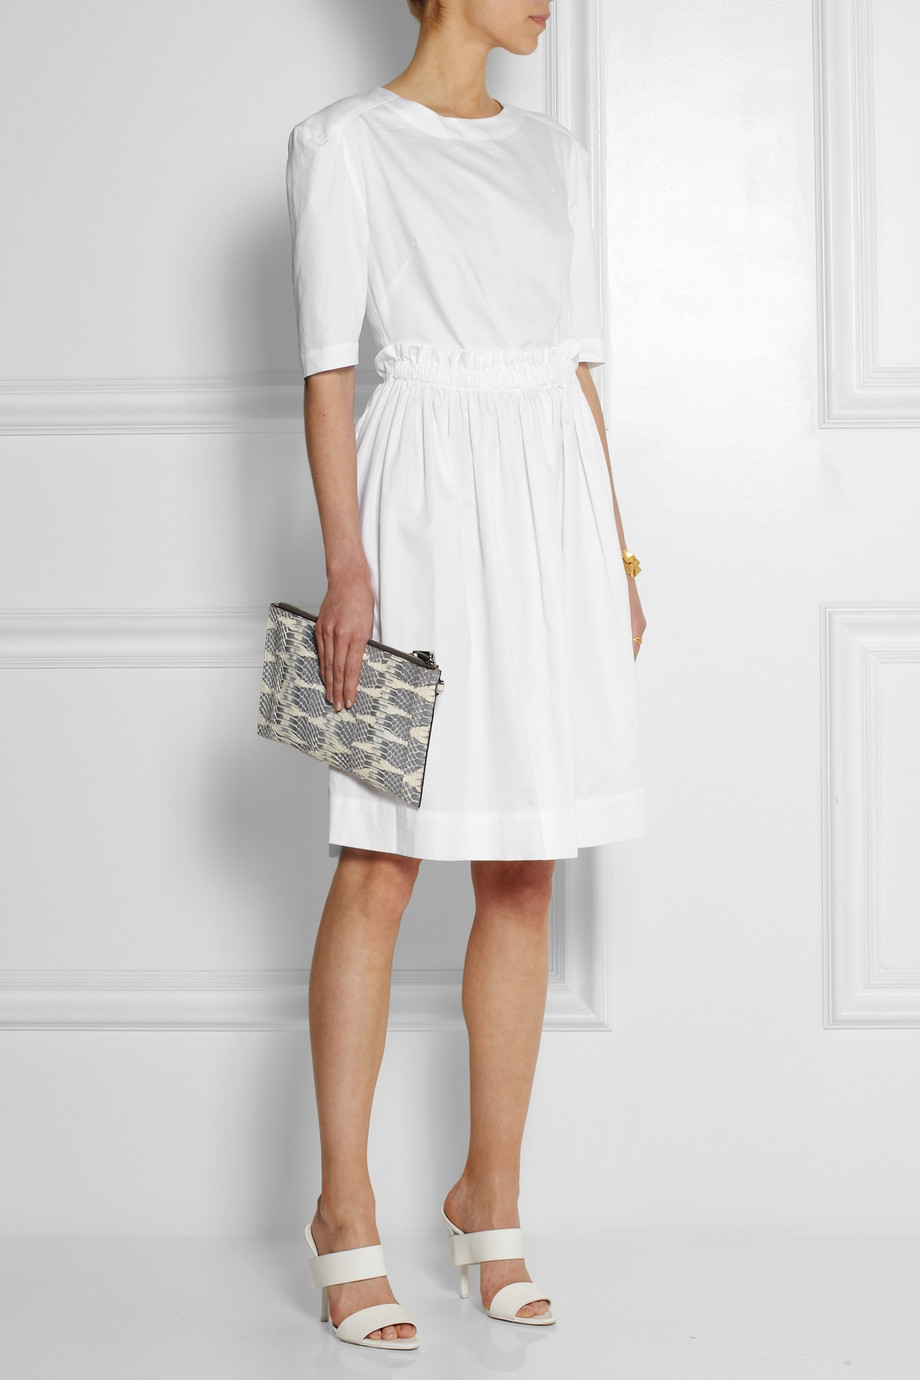 Lyst - Vivienne Westwood Anglomania Pavillion Cutout Cotton Dress in White